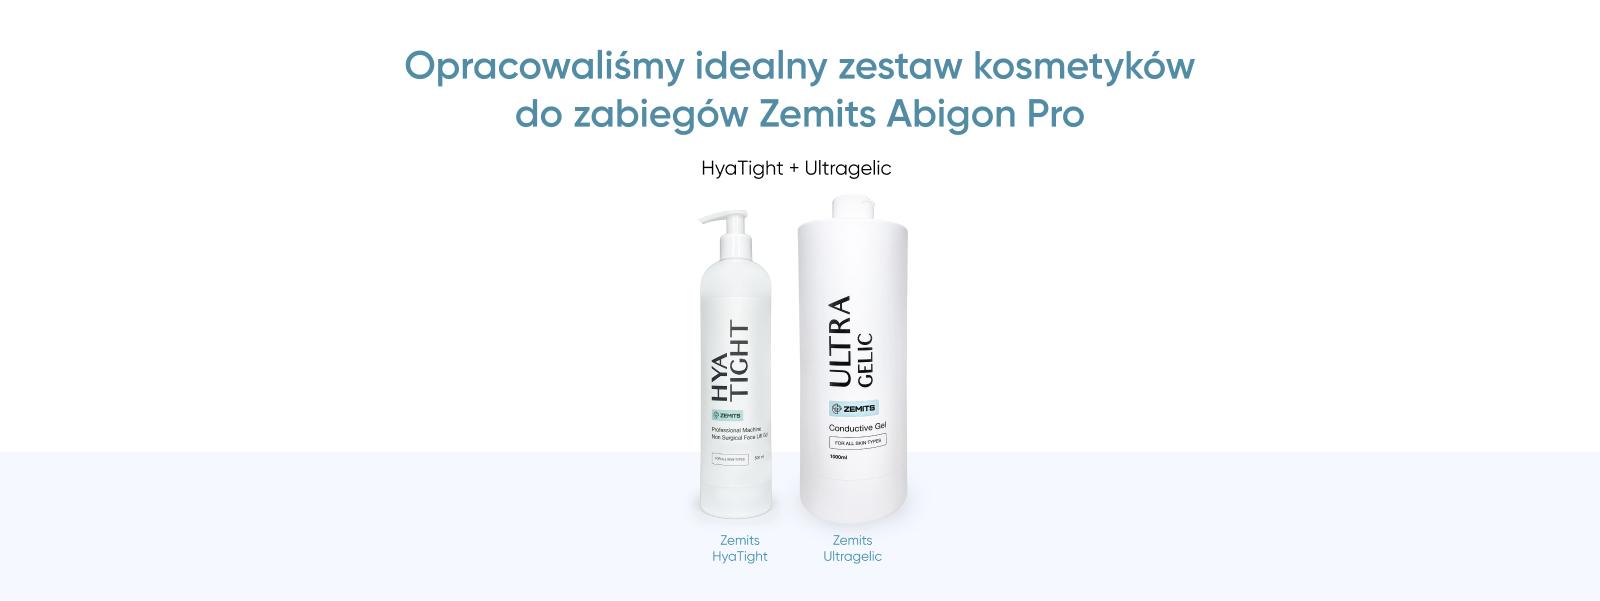 https://newfacebeauty.pl/zestaw-kosmetykw-zemits-abigon-pro